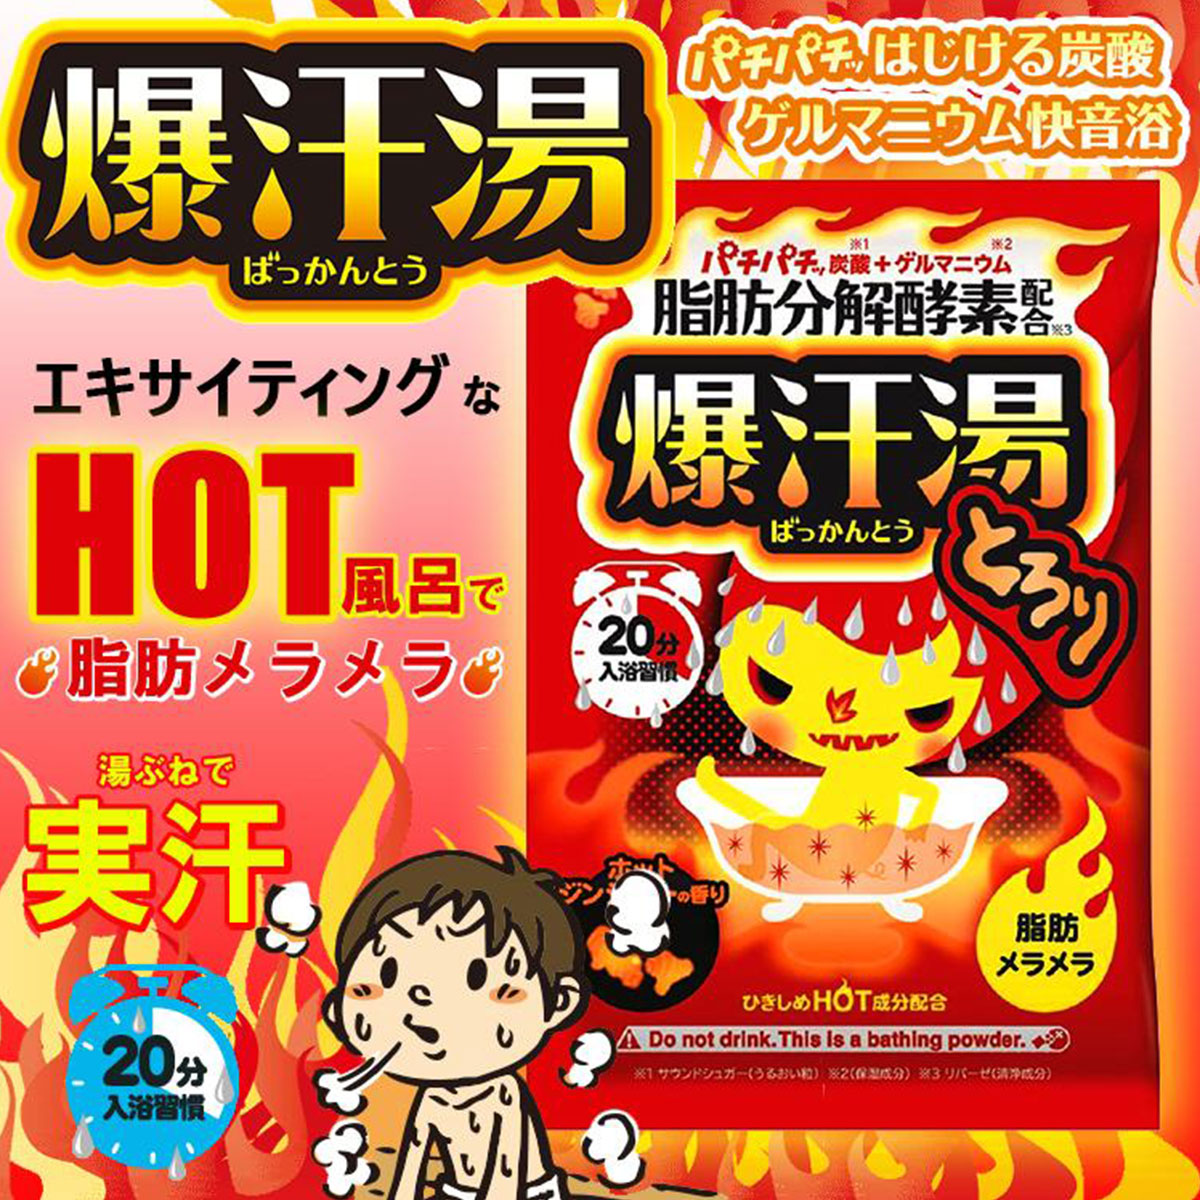 Bakusuito Fat Burning Bath Salt #Hot Aroma Scent 60g